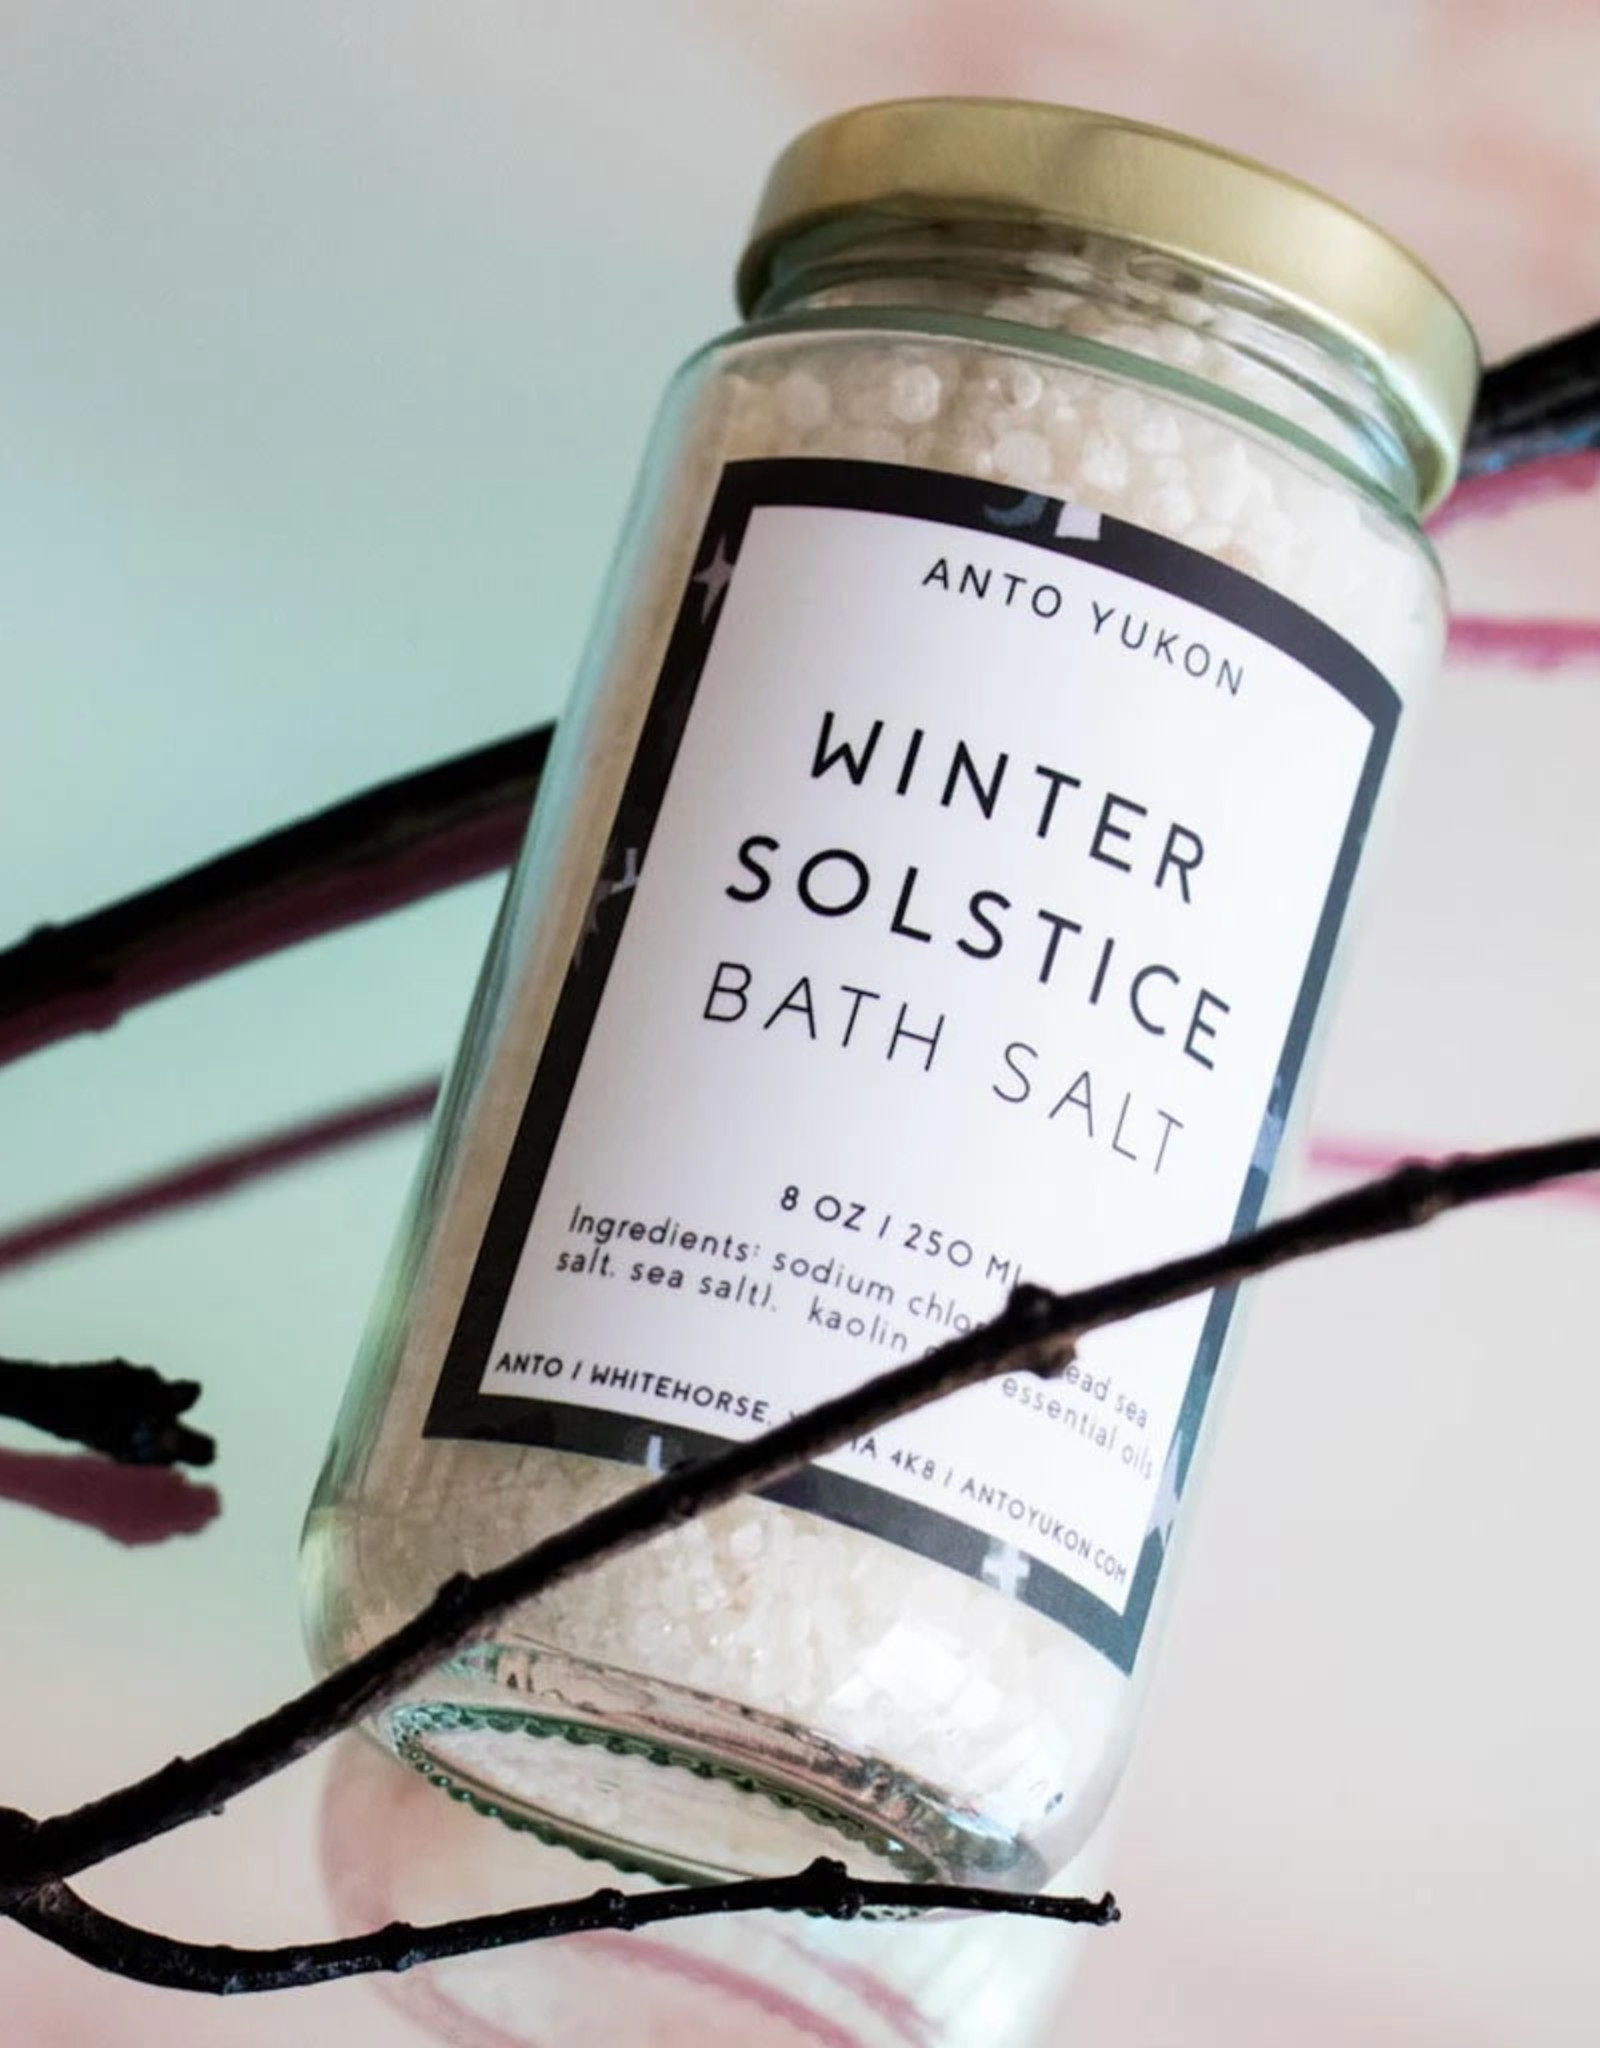 Anto Yukon Winter Solstice Bath Salt